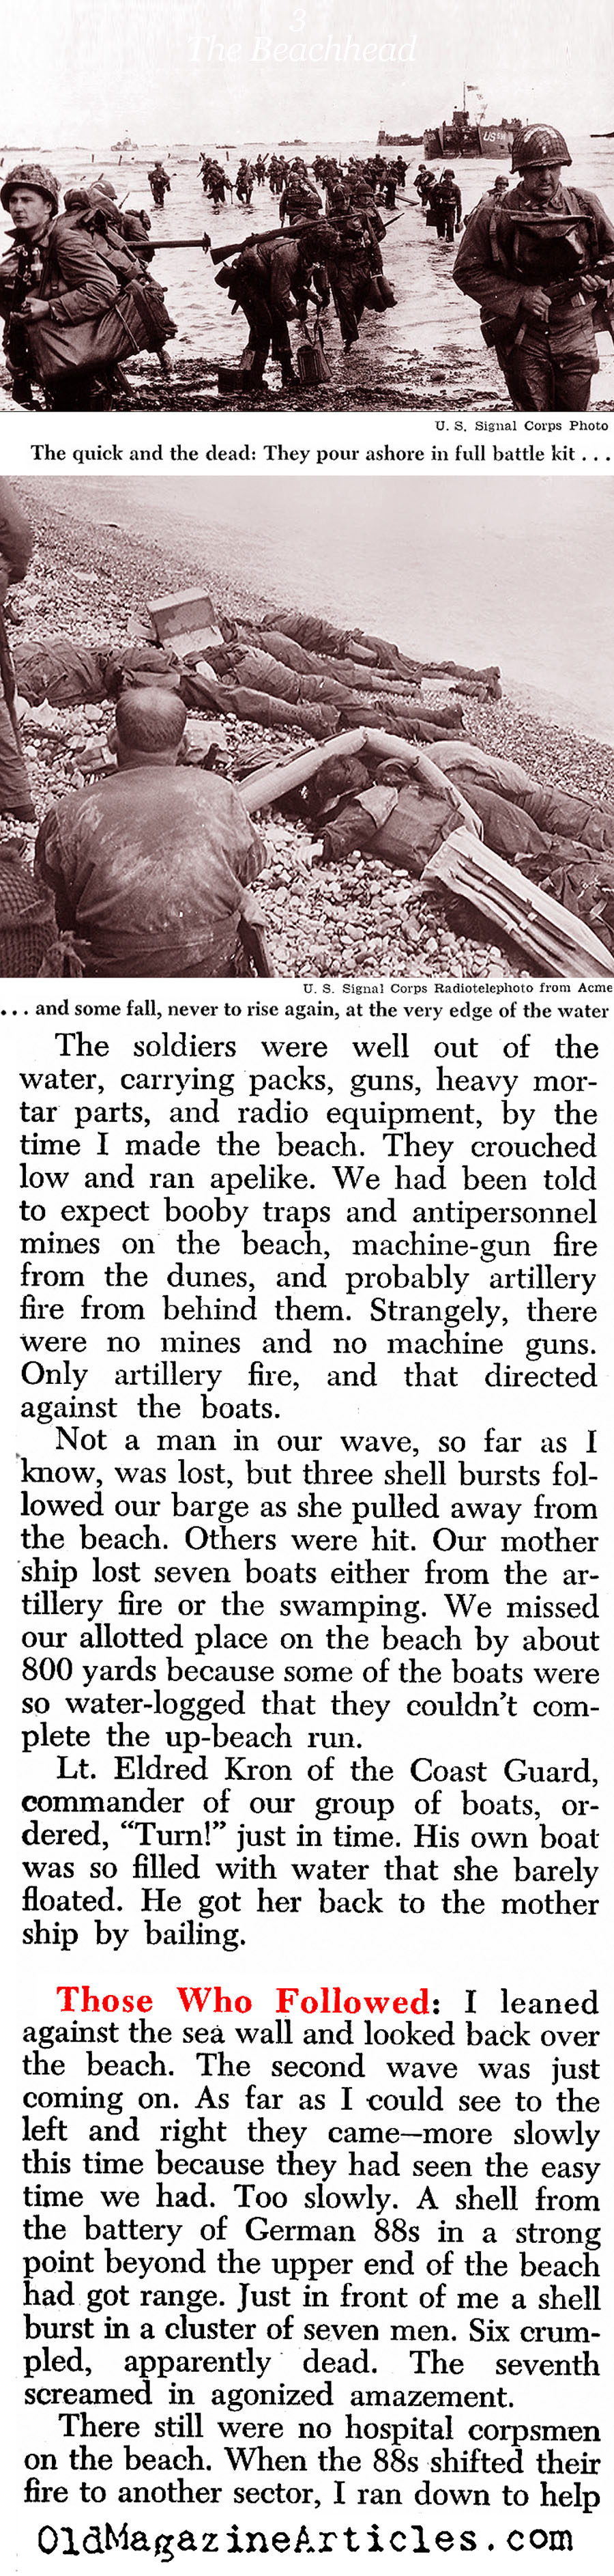 The First Wave (Newsweek Magazine, 1944)